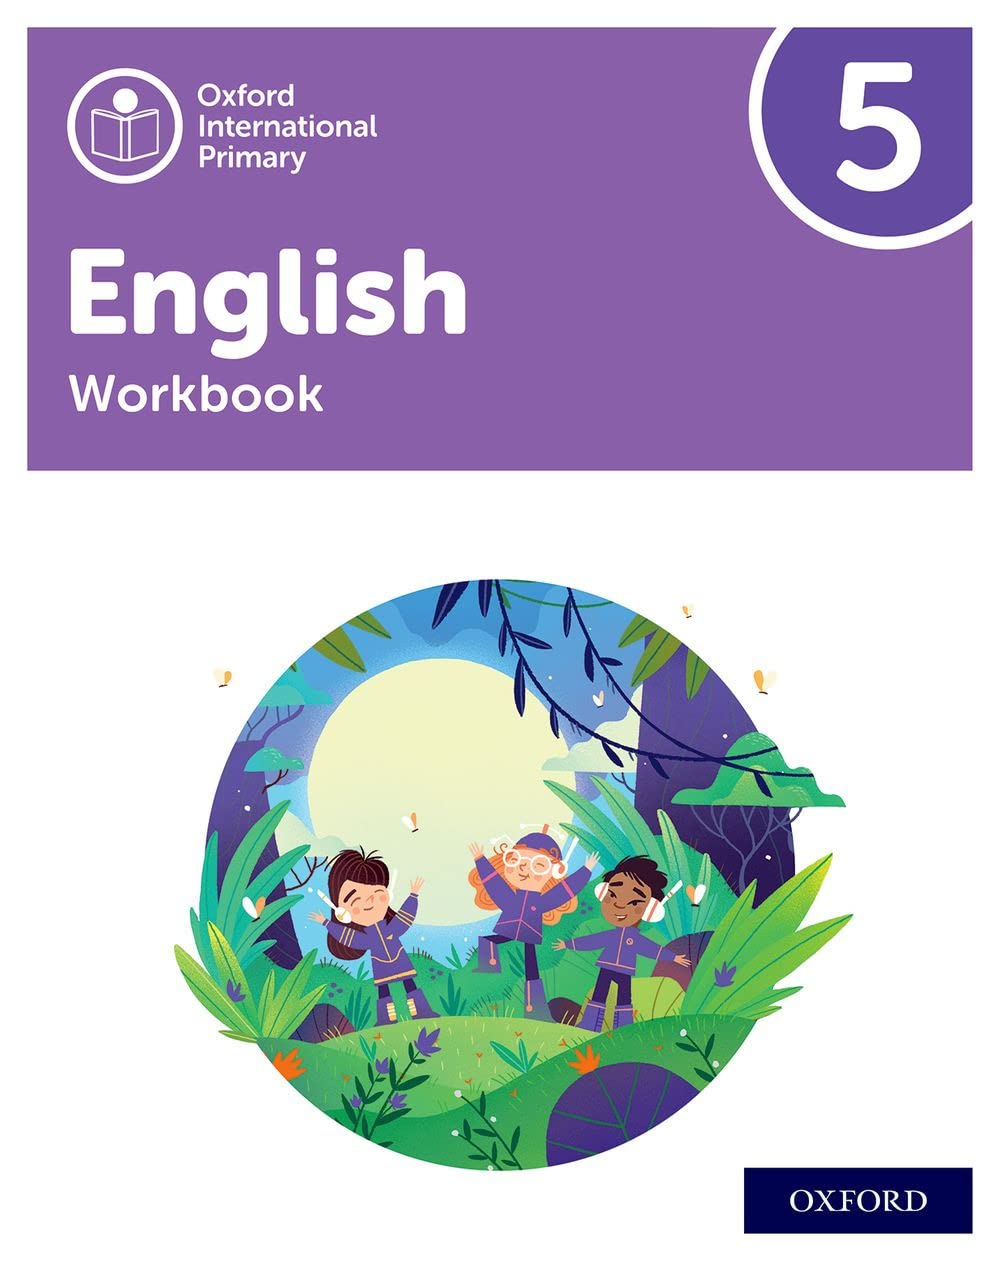 Oxford International Primary English: Workbook Level 5